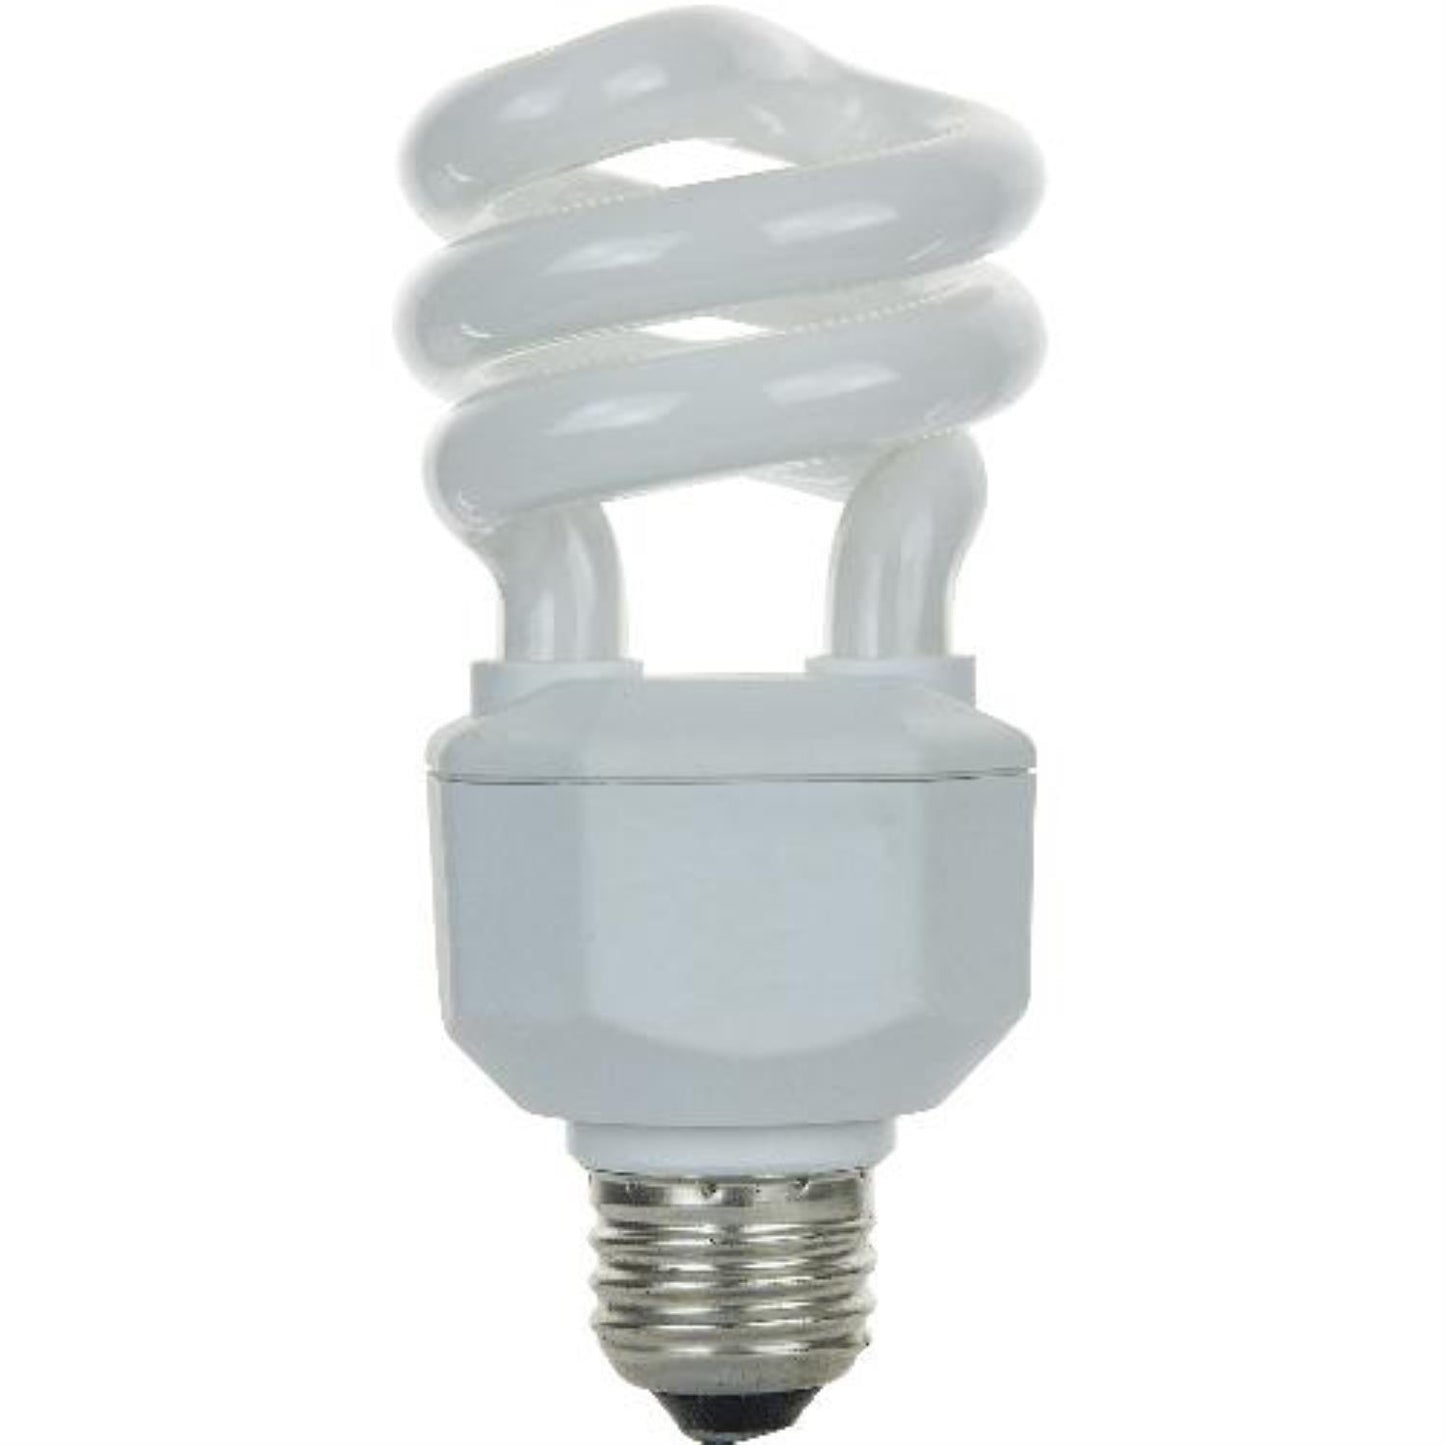 Sunlite 15 Watt Daylight Medium Base Spiral CFL Light Bulb